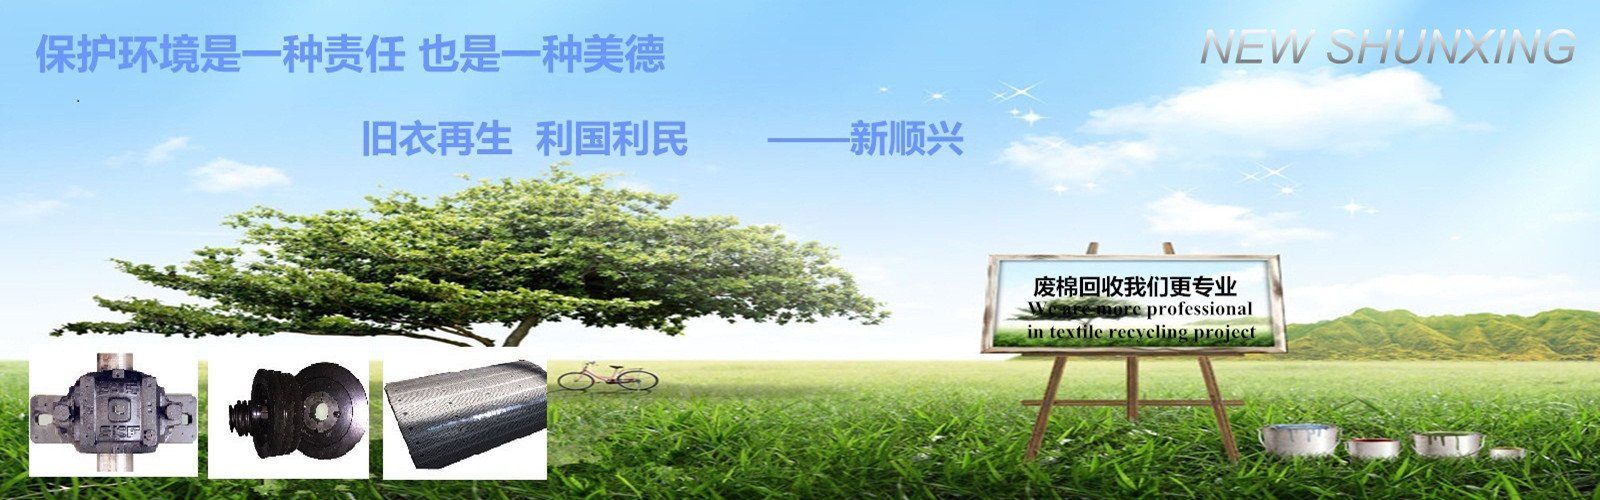 Qing Dao New Shunxing Environmental Protection and Technology Co,Ltd